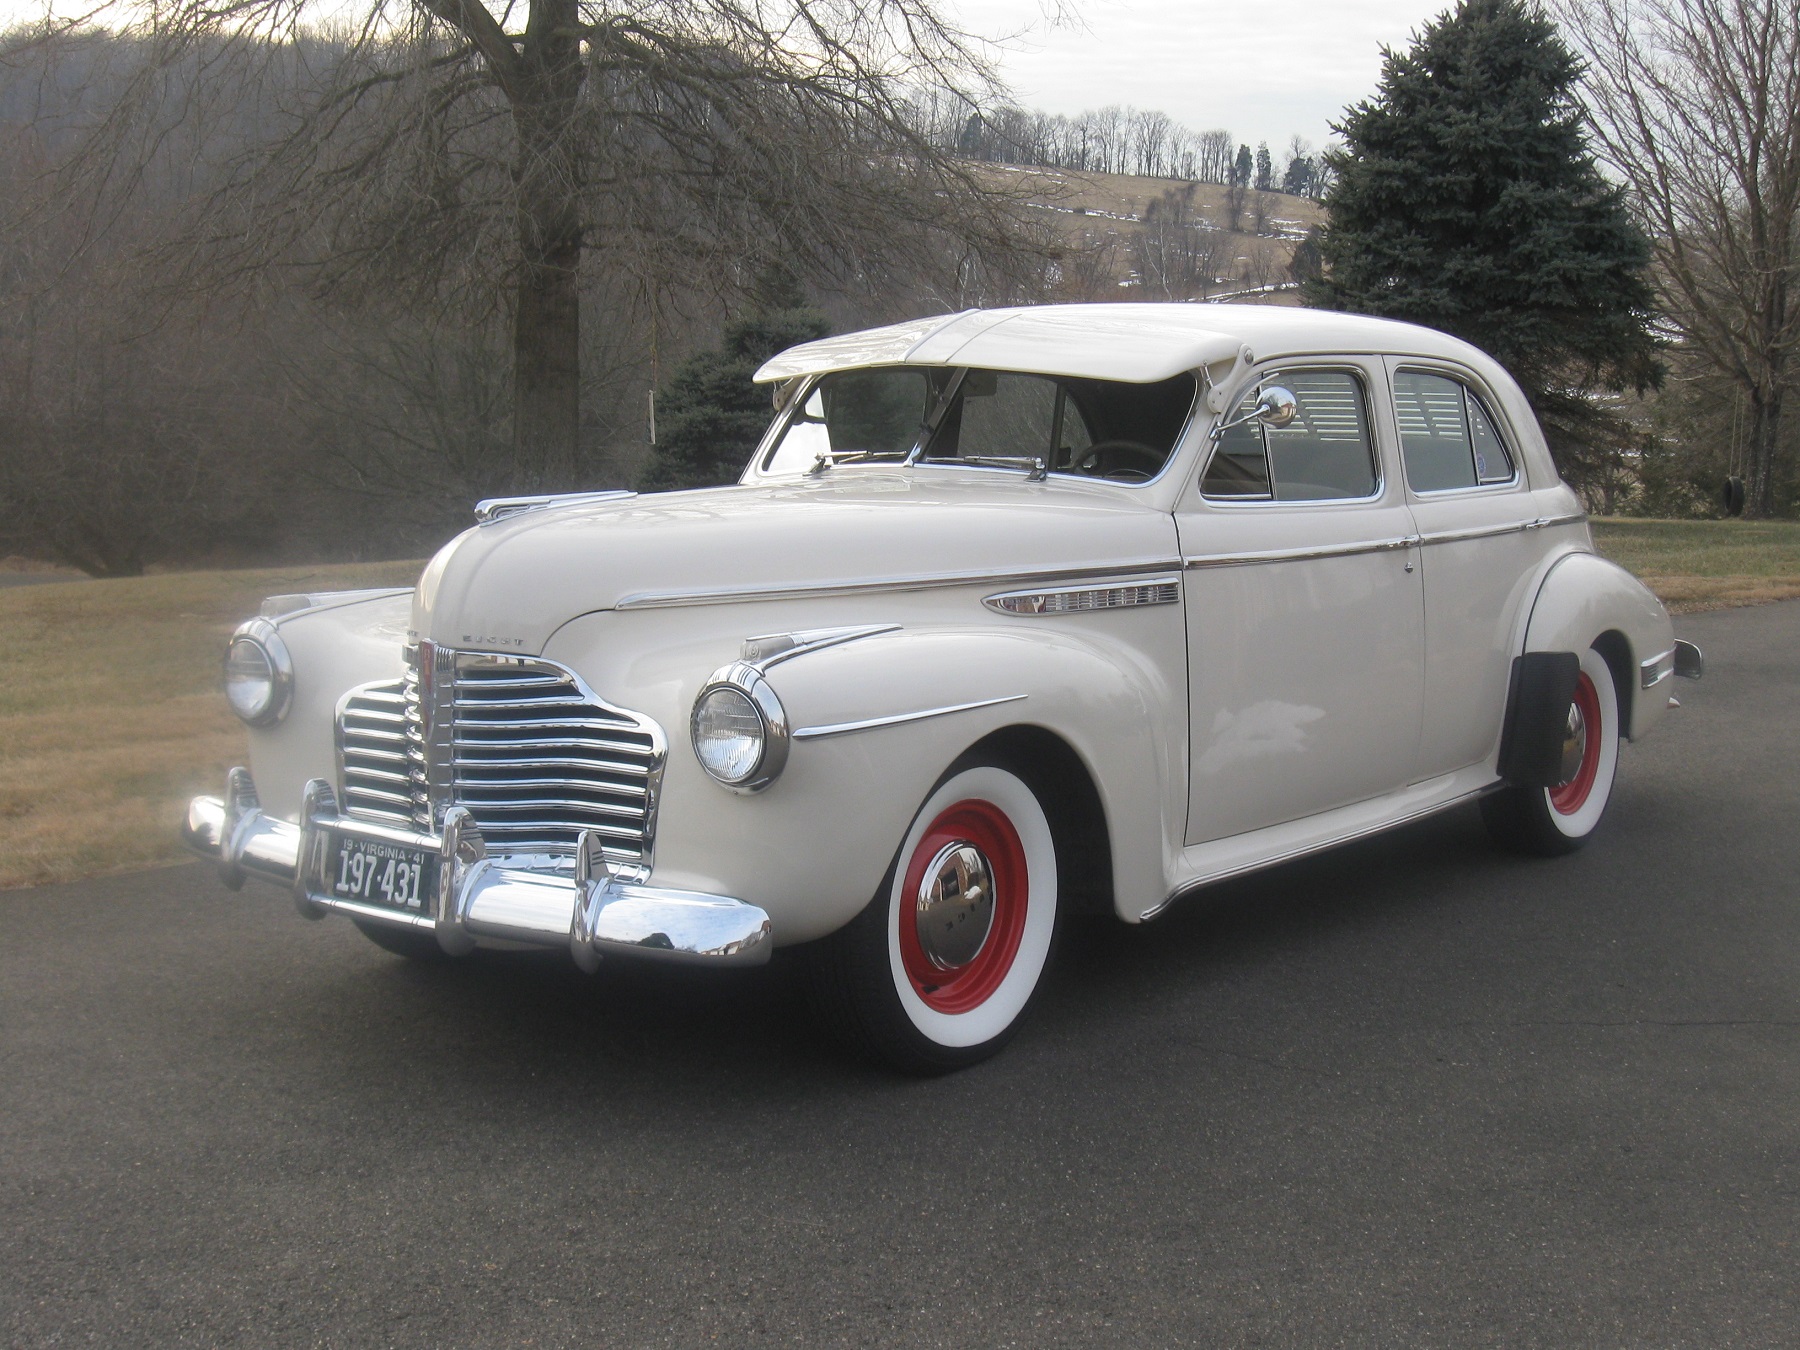 Classic Cars Of 1940s | AskAutoExperts.com